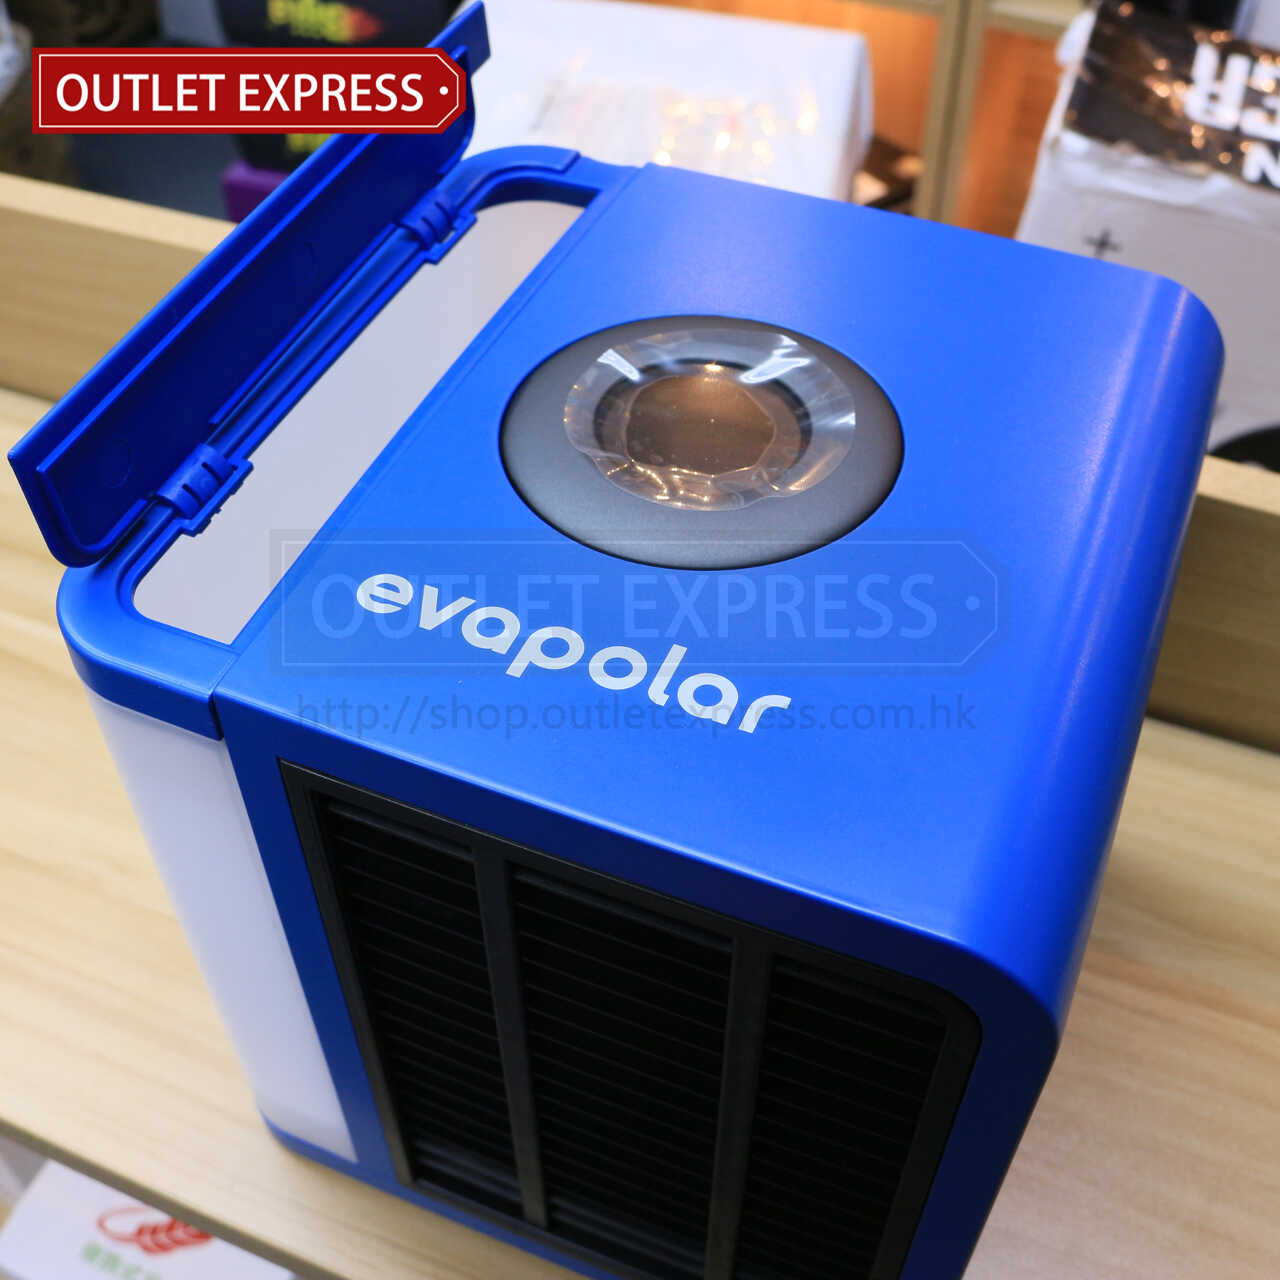 Evapolar 小型流動冷氣機(蓋部圖)- Outlet Express HK生活百貨城實拍相片